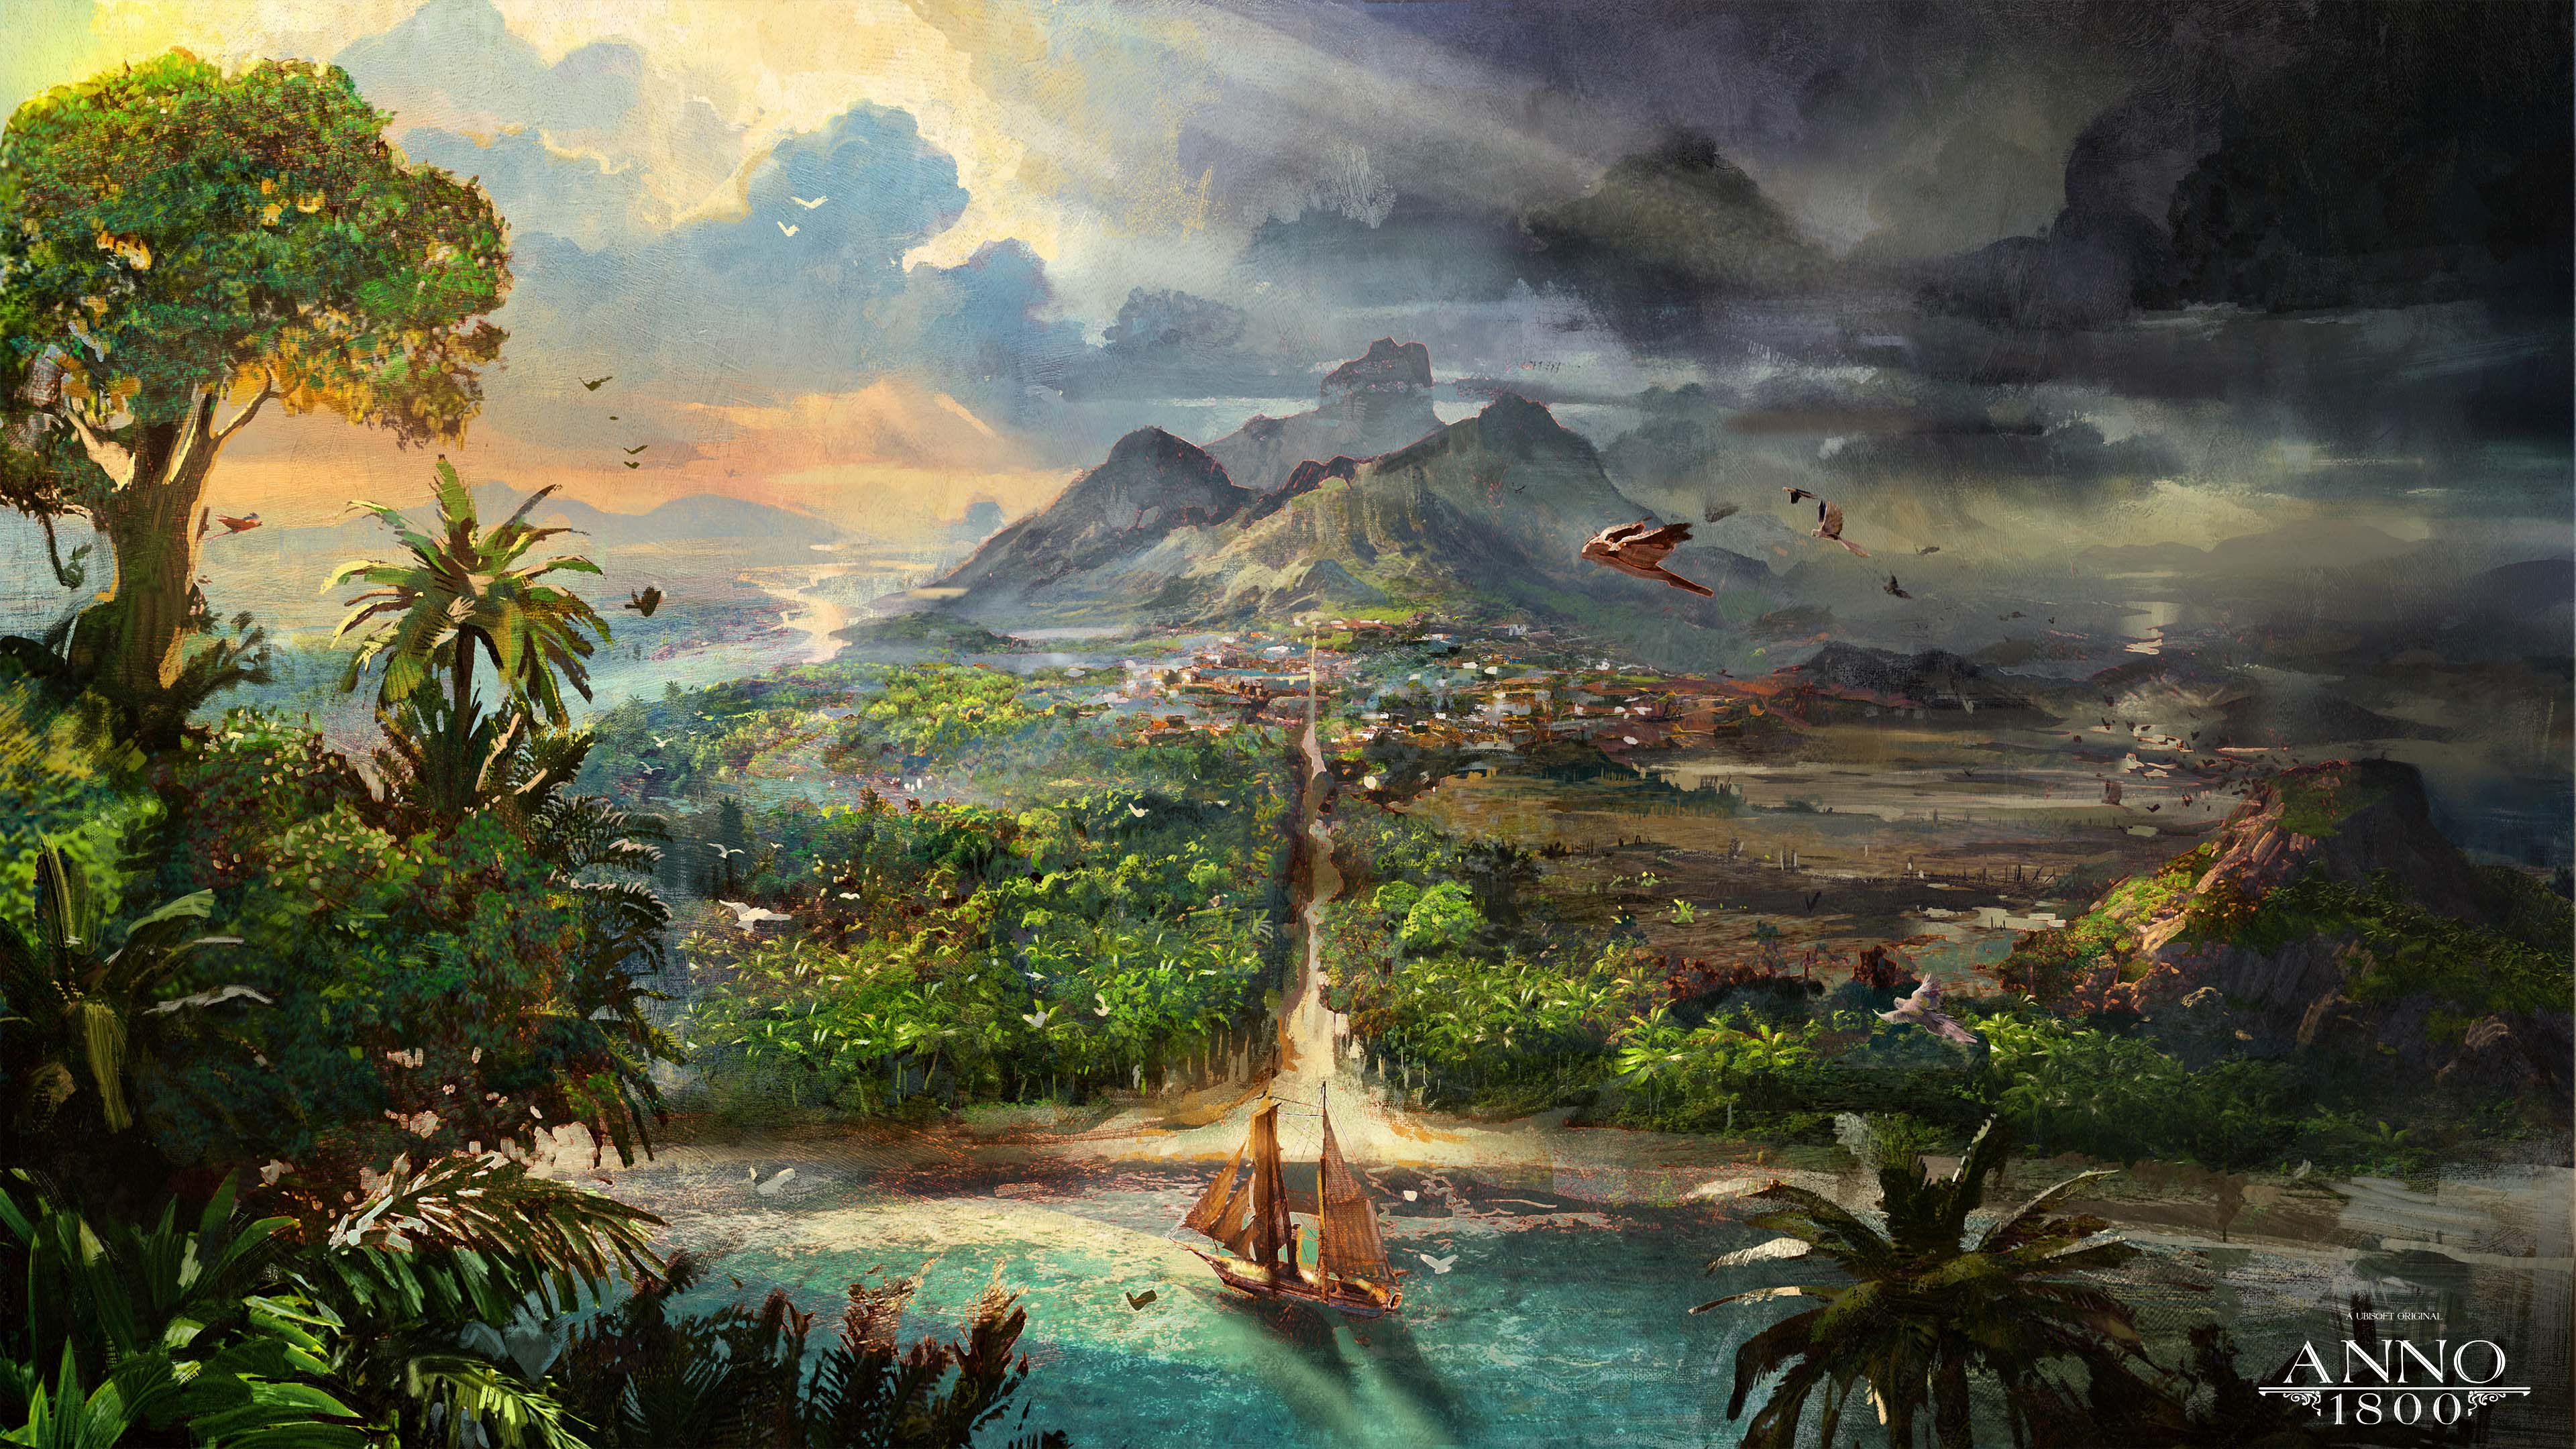 General 3840x2160 Anno 1800 1800s digital art concept art artwork Ubisoft South America tropical forest island video games PC gaming video game art video game landscape